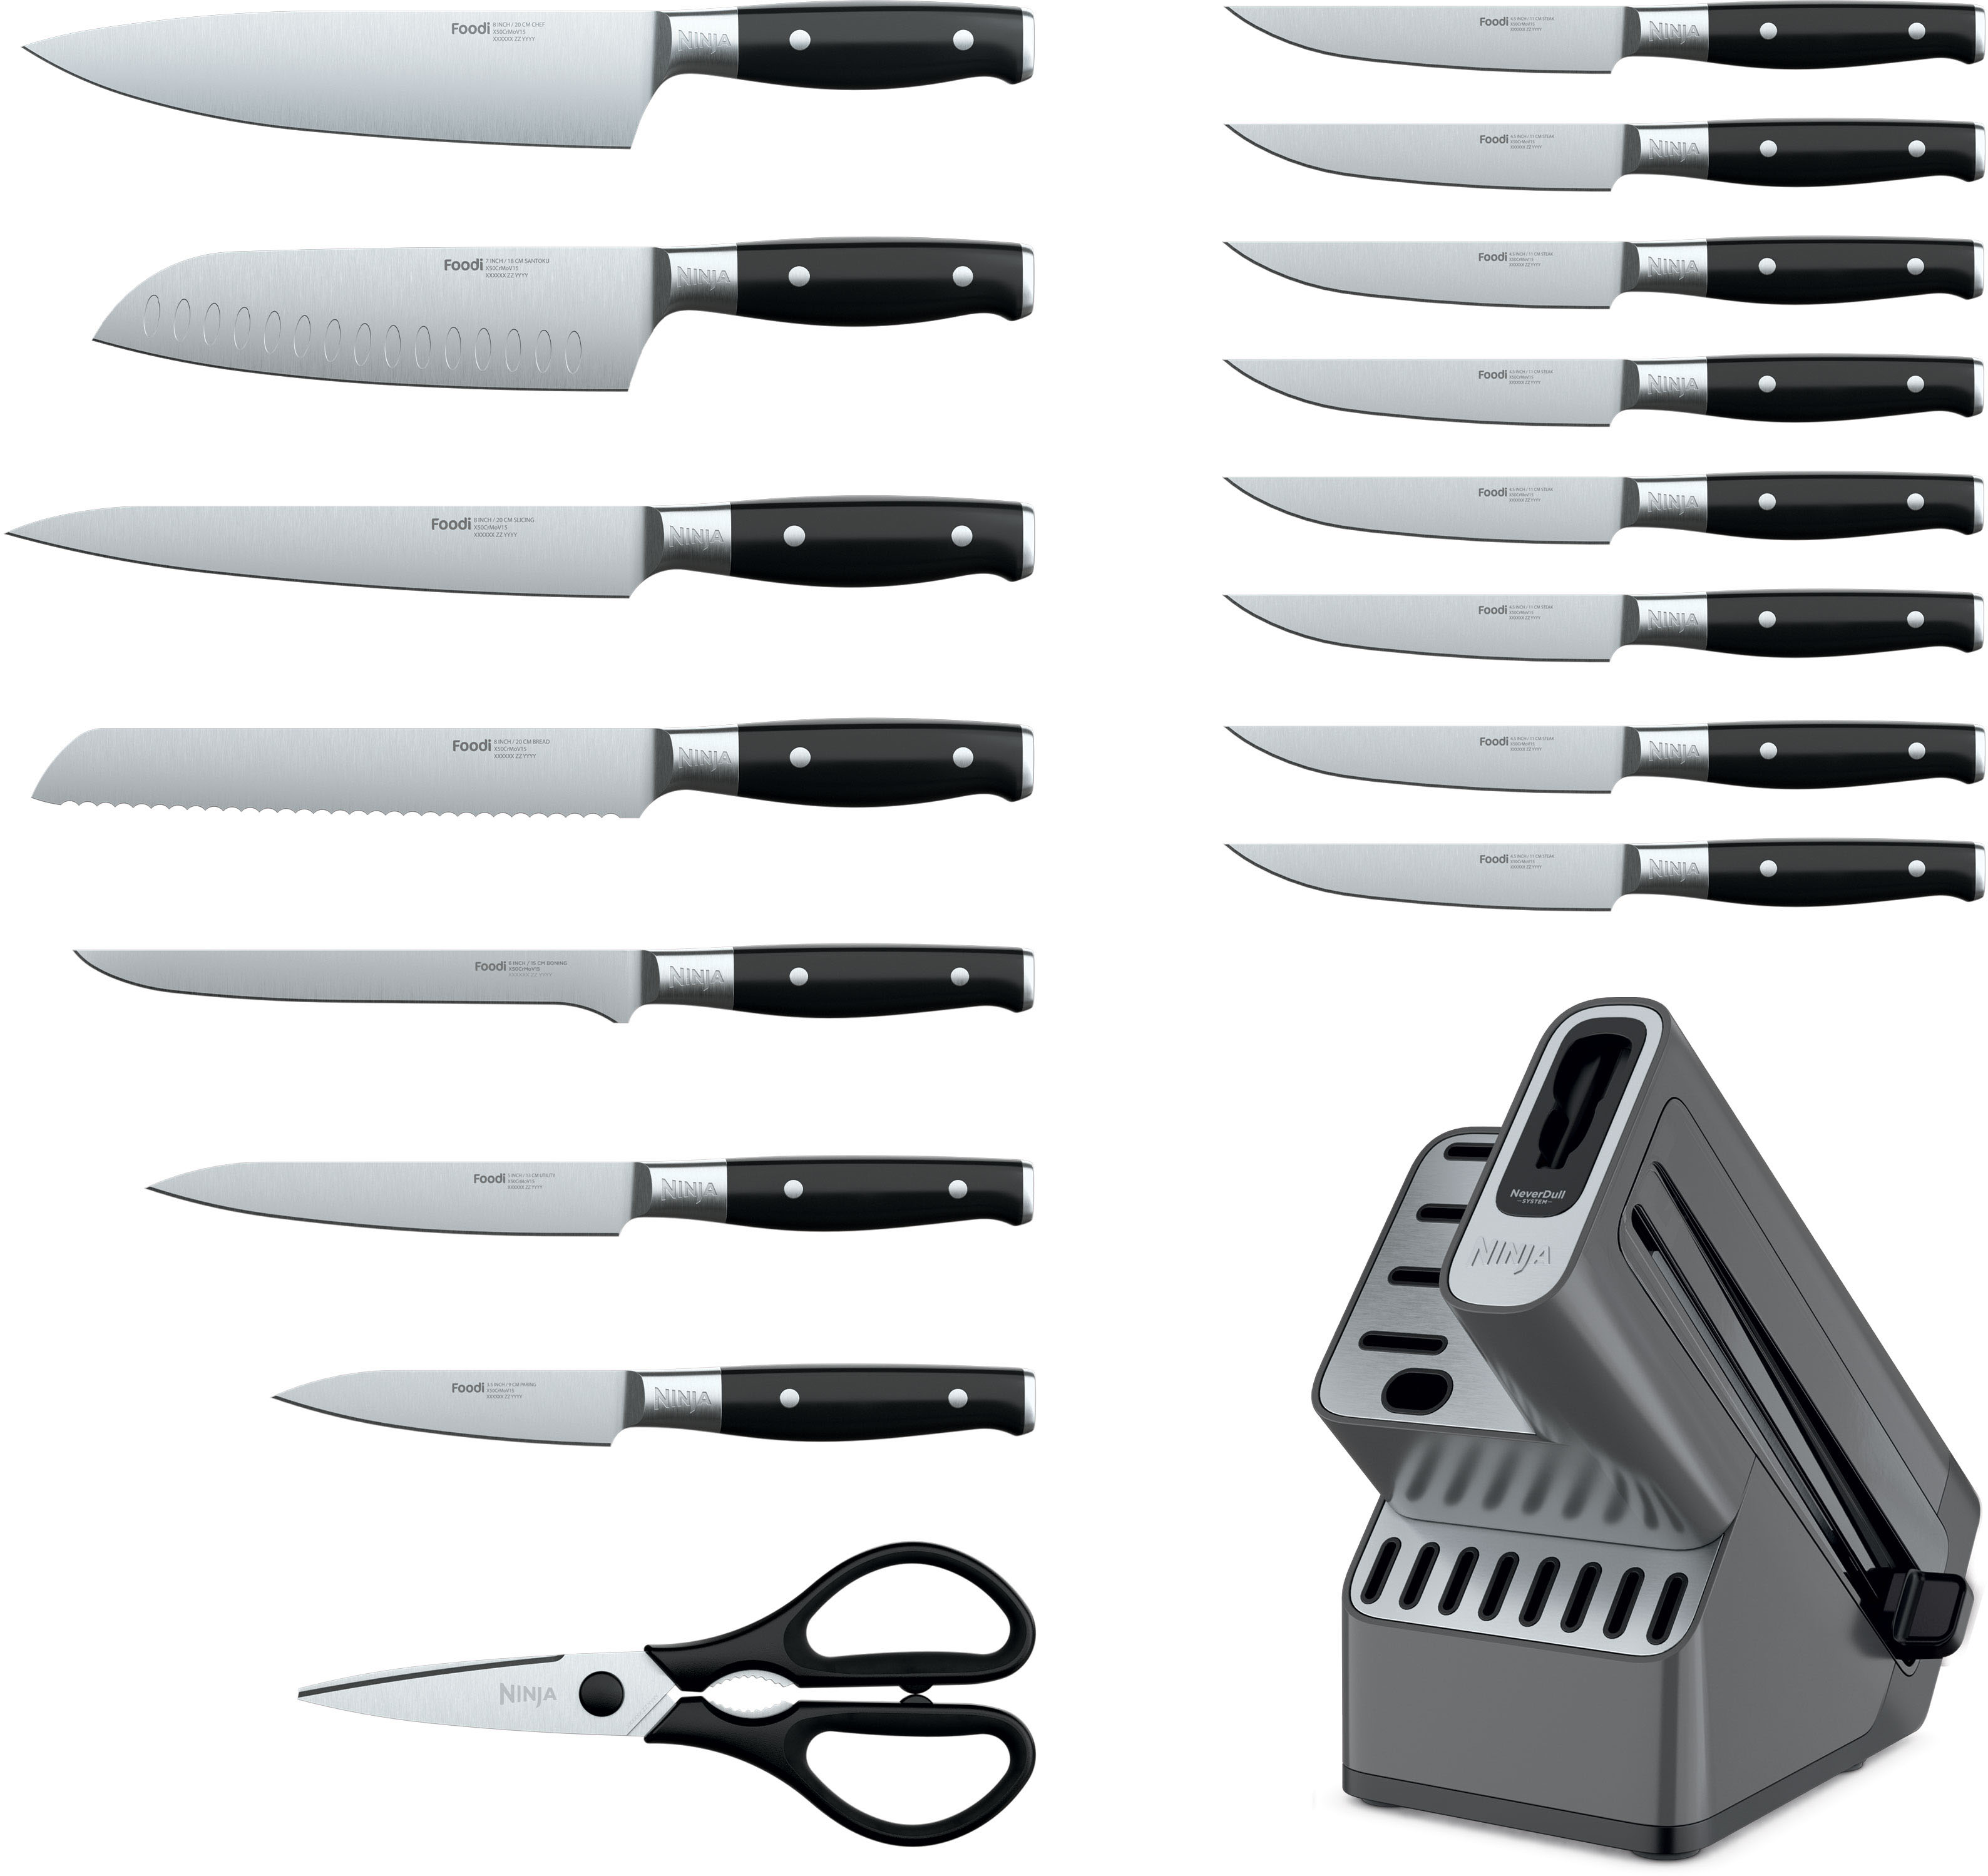  Ninja K32017 Foodi NeverDull Premium Knife System, 17 Piece Knife  Block Set with Built-in Sharpener, German Stainless Steel Knives, Black:  Home & Kitchen